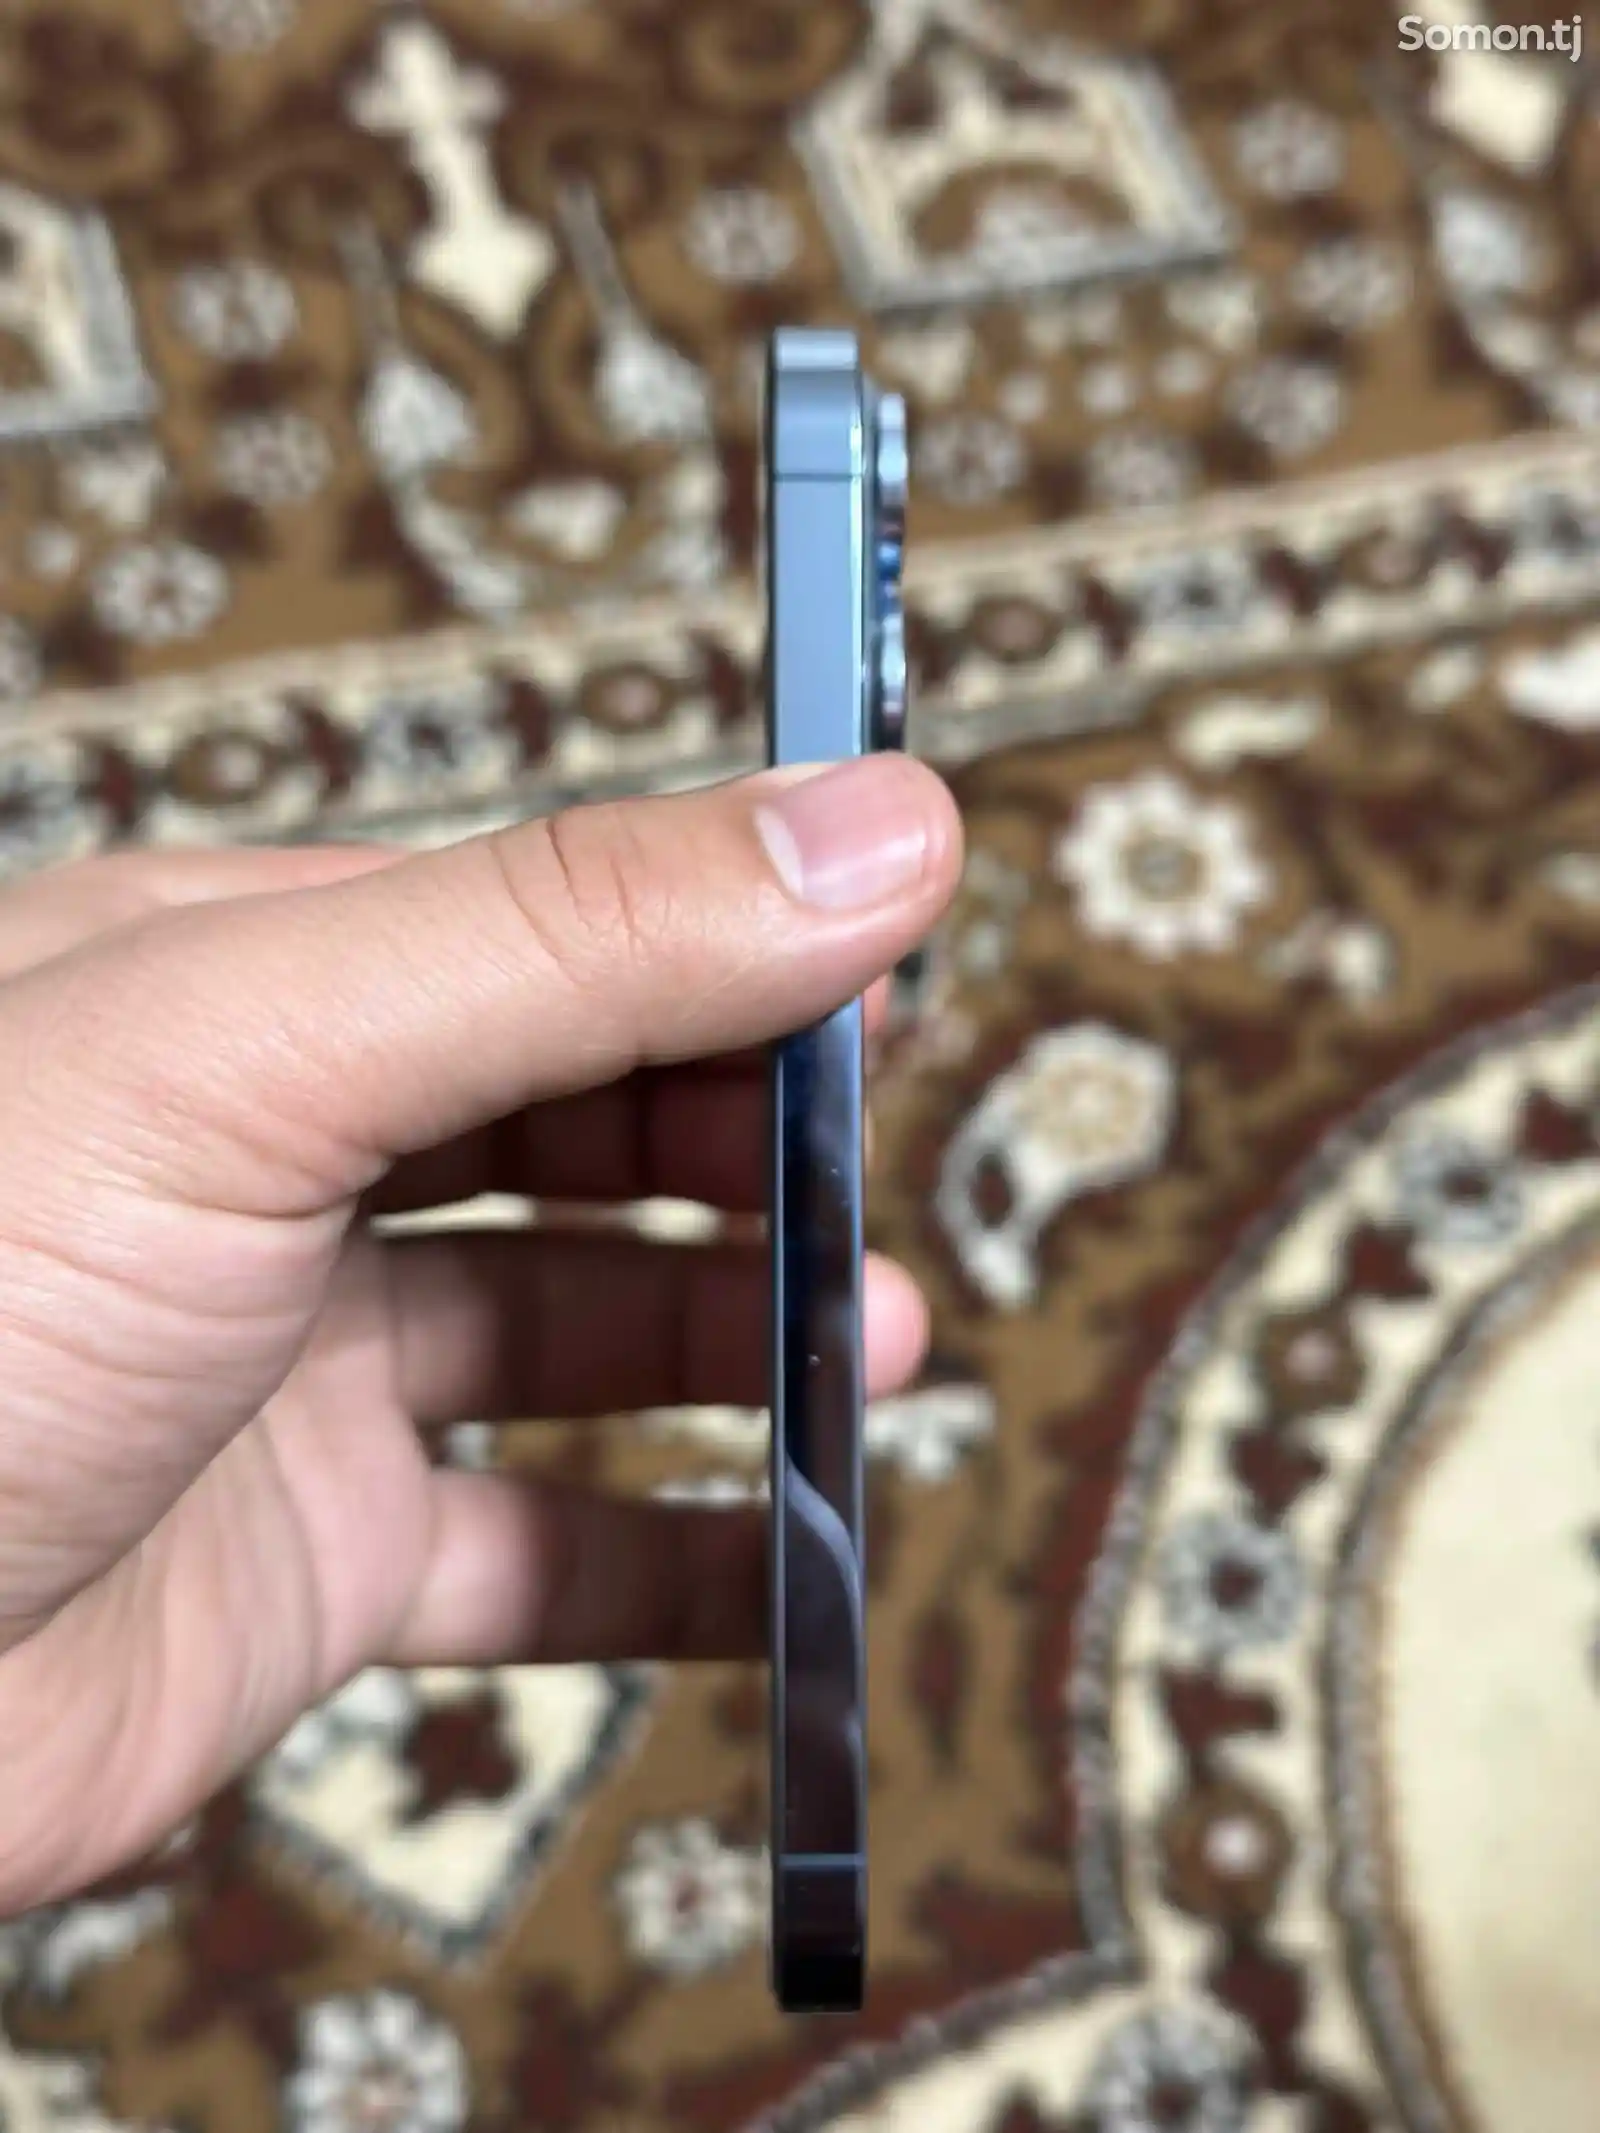 Apple iPhone 13 Pro, 128 gb, Sierra Blue-2